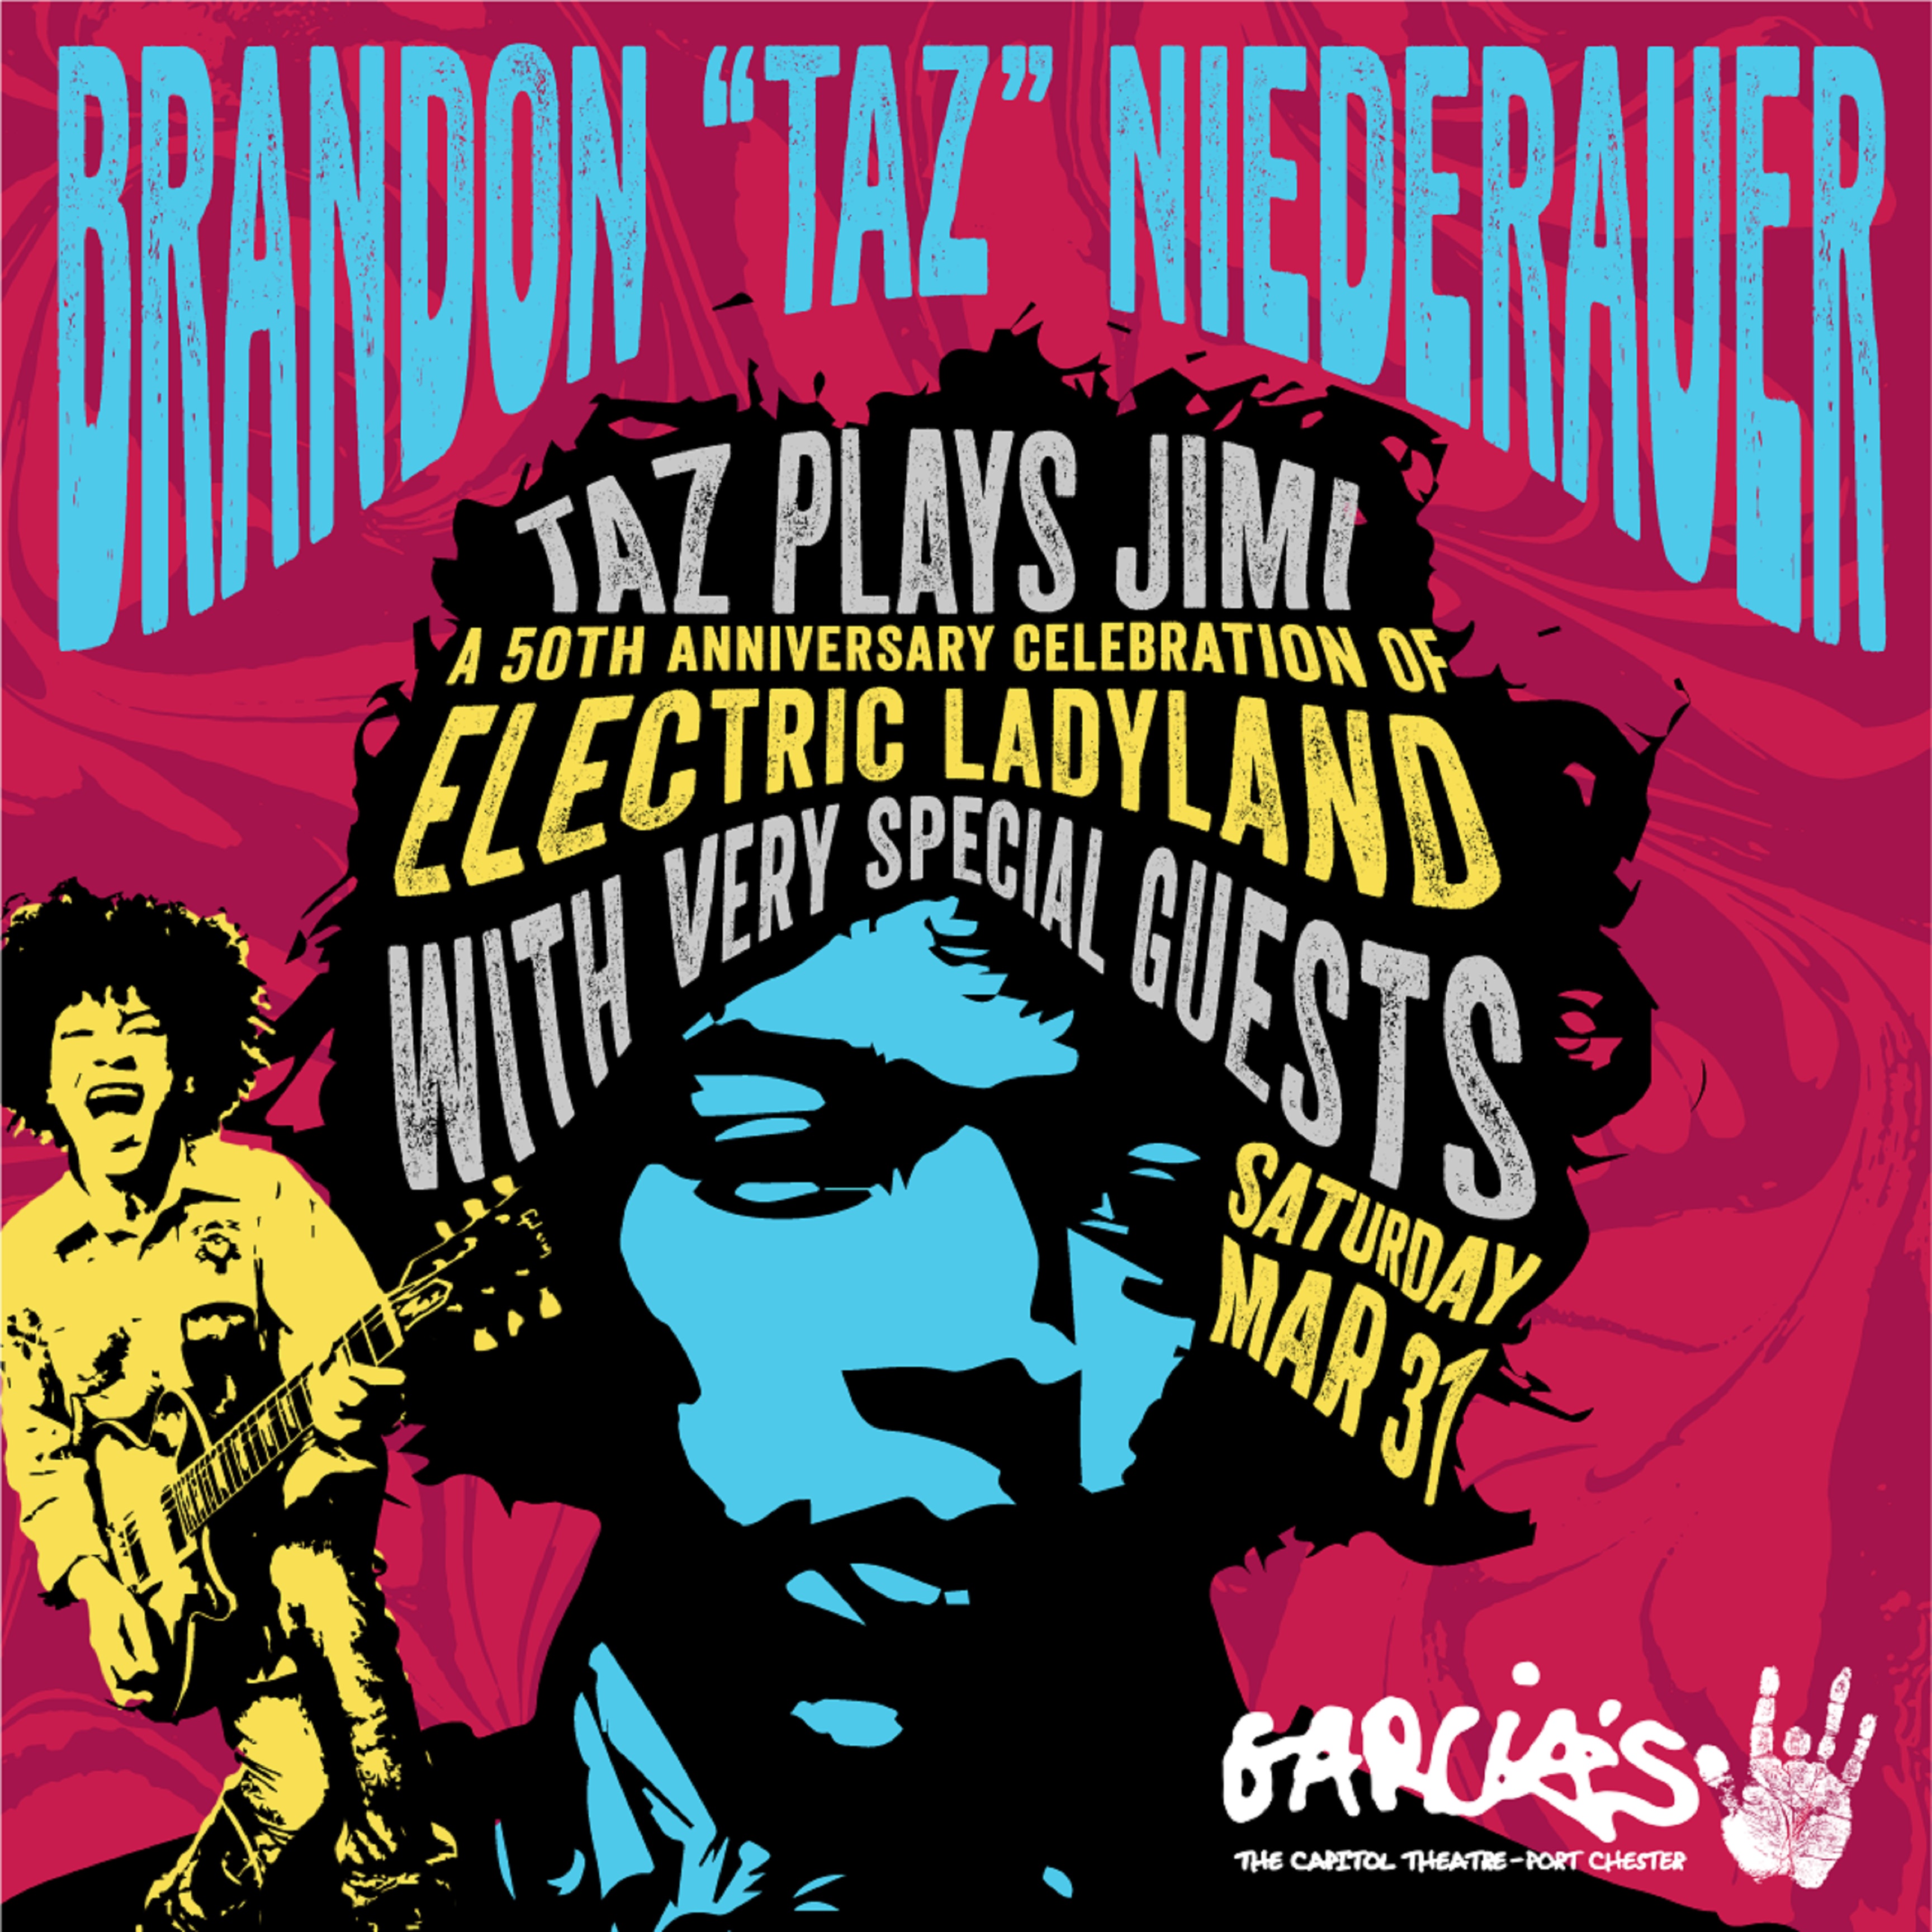 Brandon “Taz” Niederauer to celebrate 50th anniversary of Jimi Hendrix’s Electric Ladyland at Garcia’s